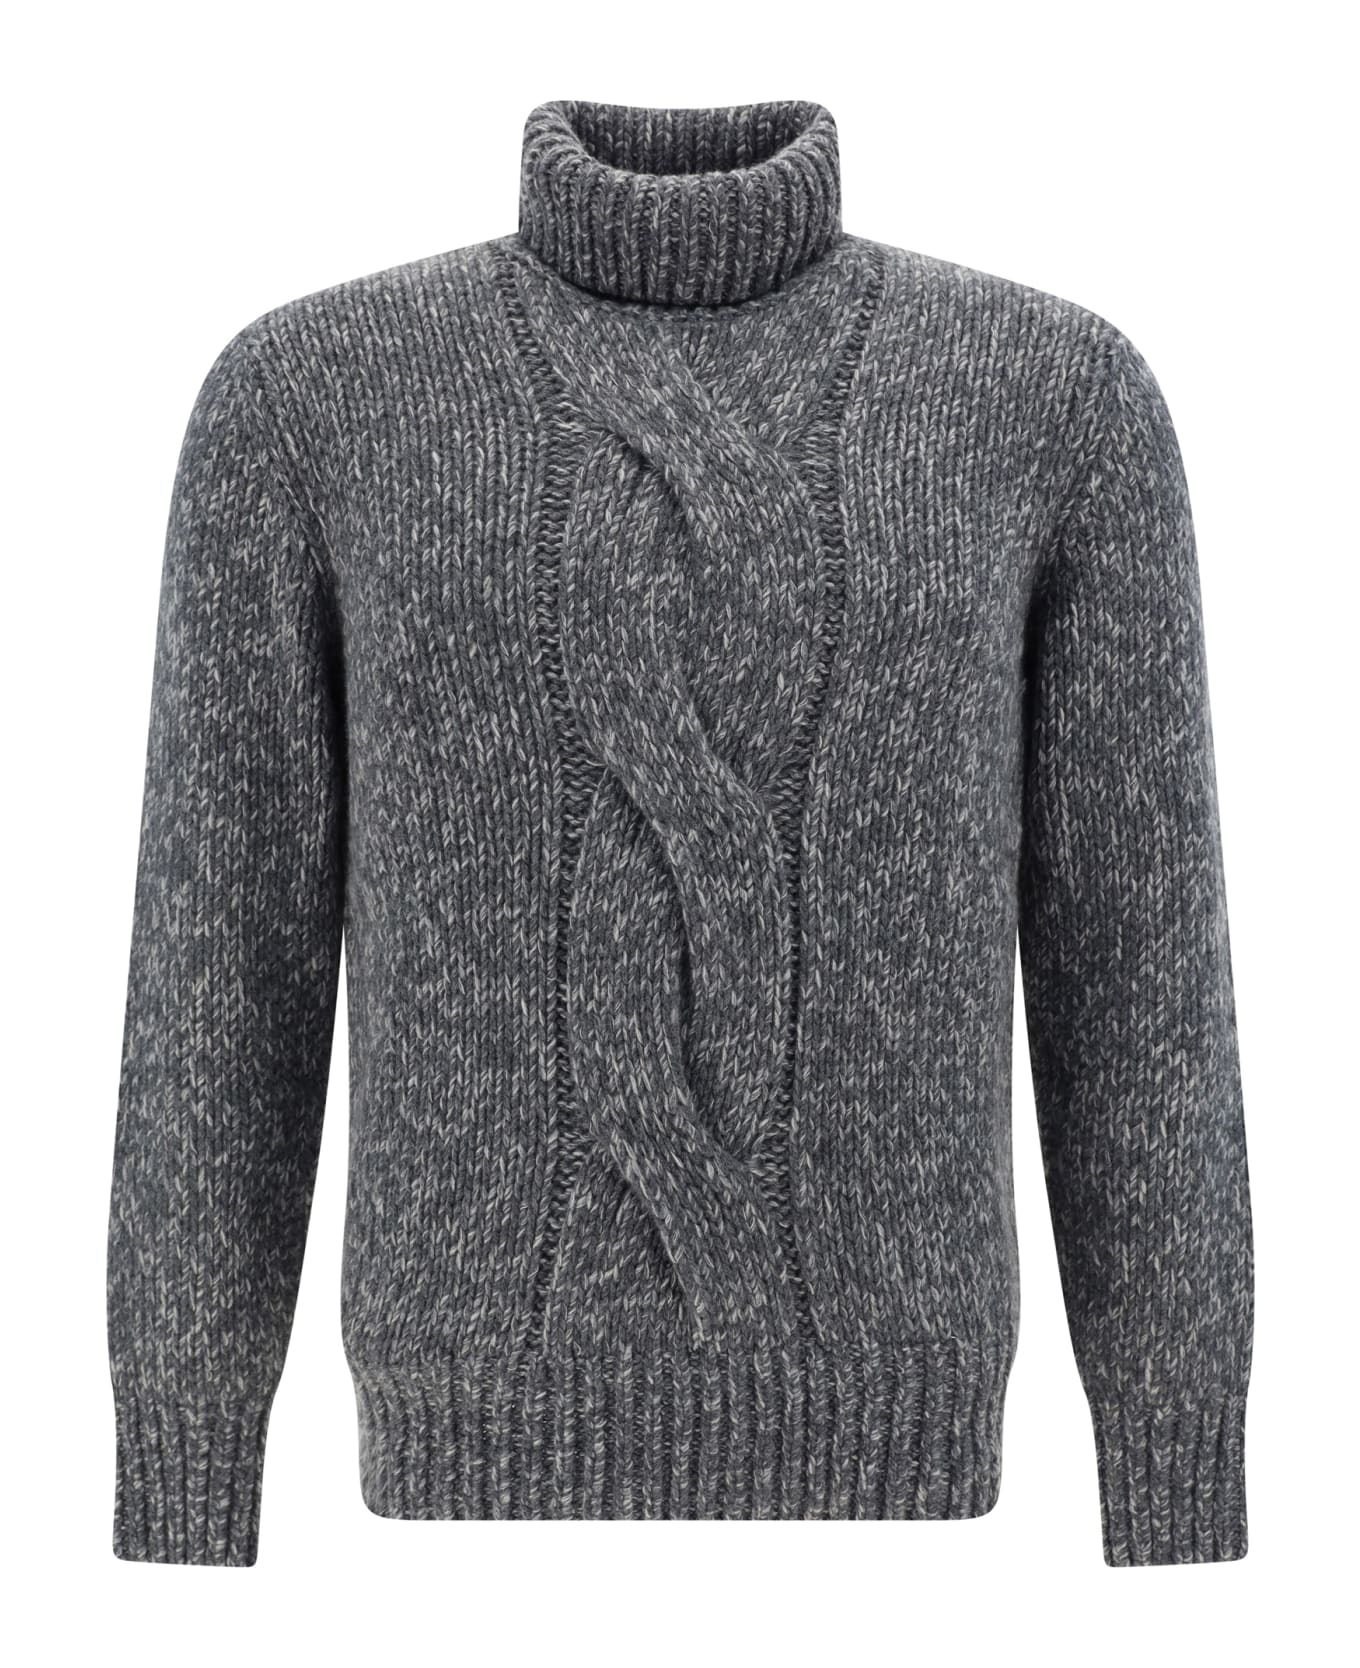 Brunello Cucinelli Knit Turtleneck Sweater - Lead